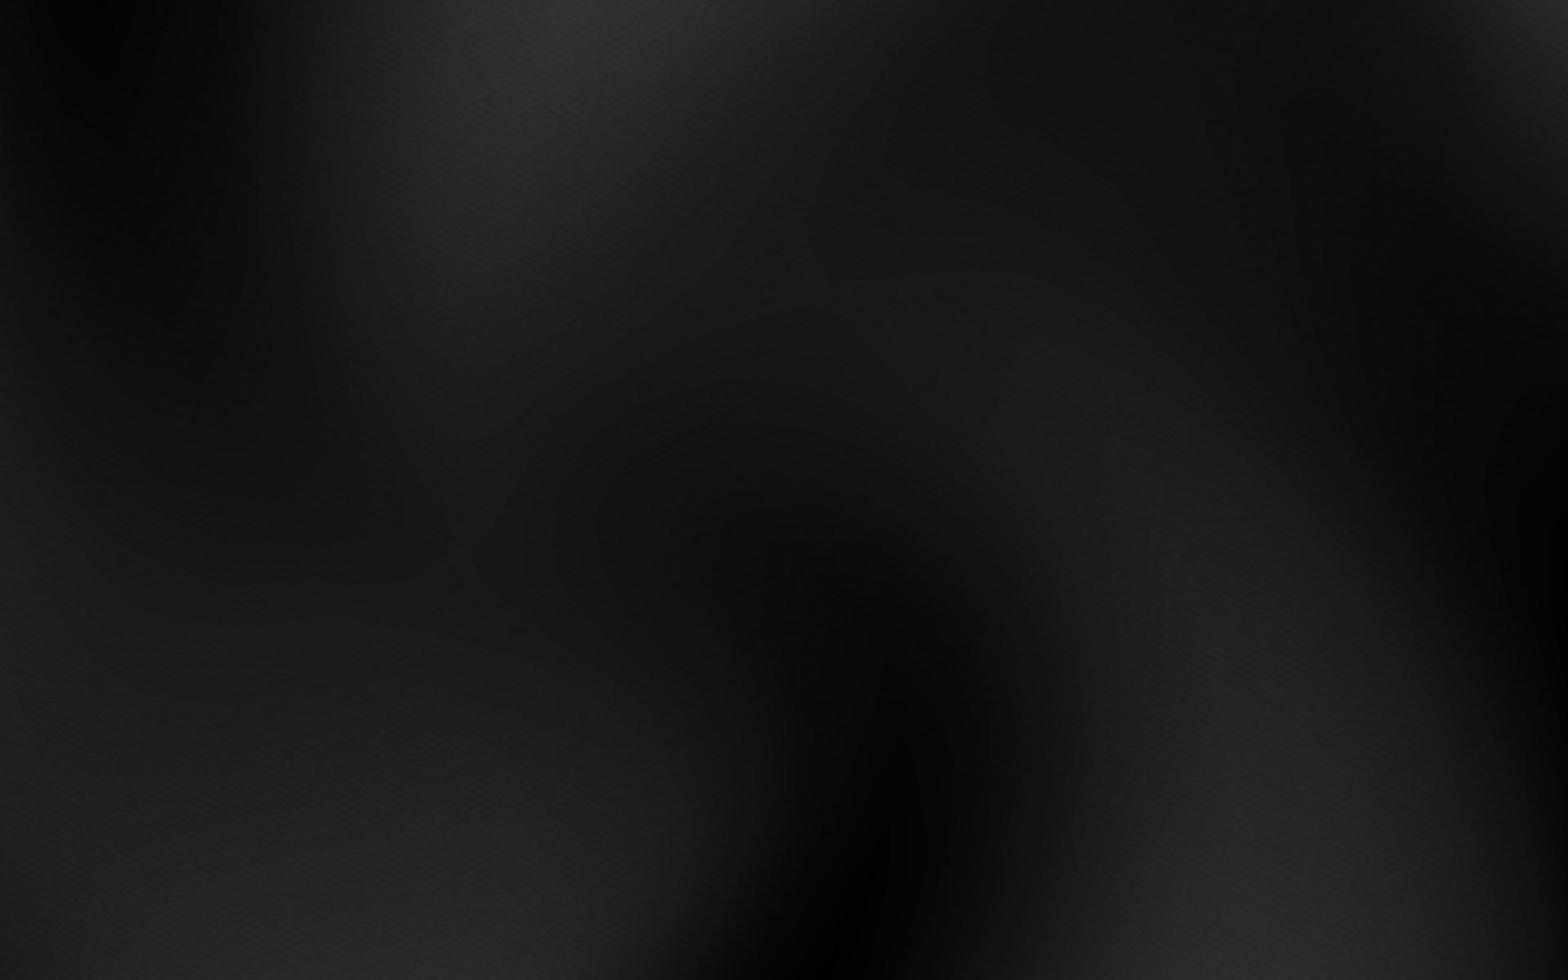 zwart papier structuur achtergrond. vector illustratie. eps10